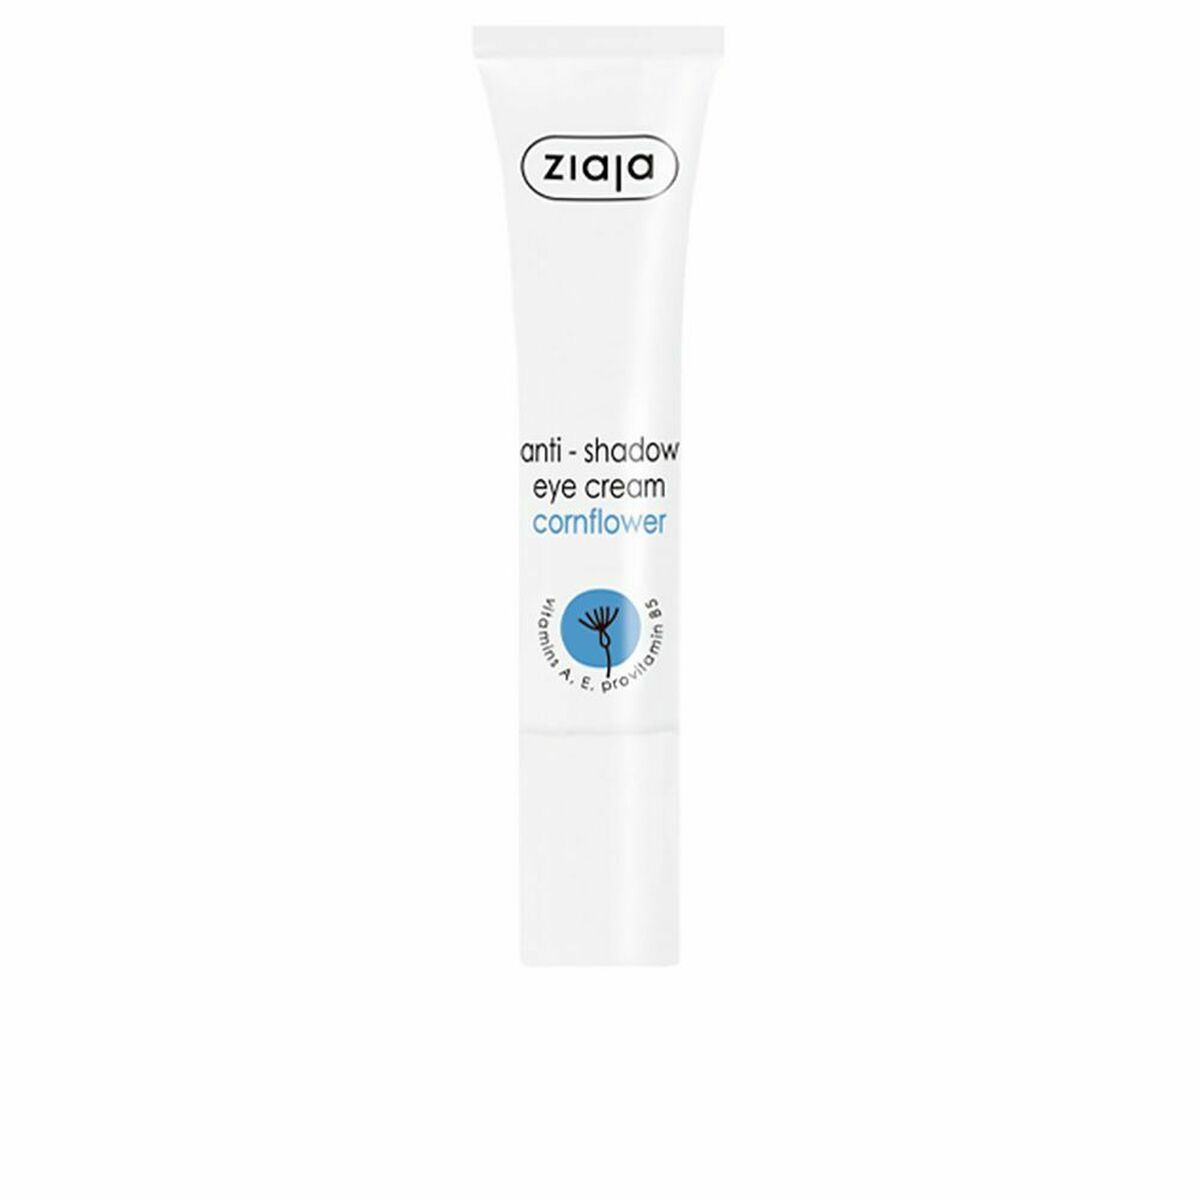 Anti-eye bags Ziaja Ojeras Cream 15 ml | Ziaja | Aylal Beauty